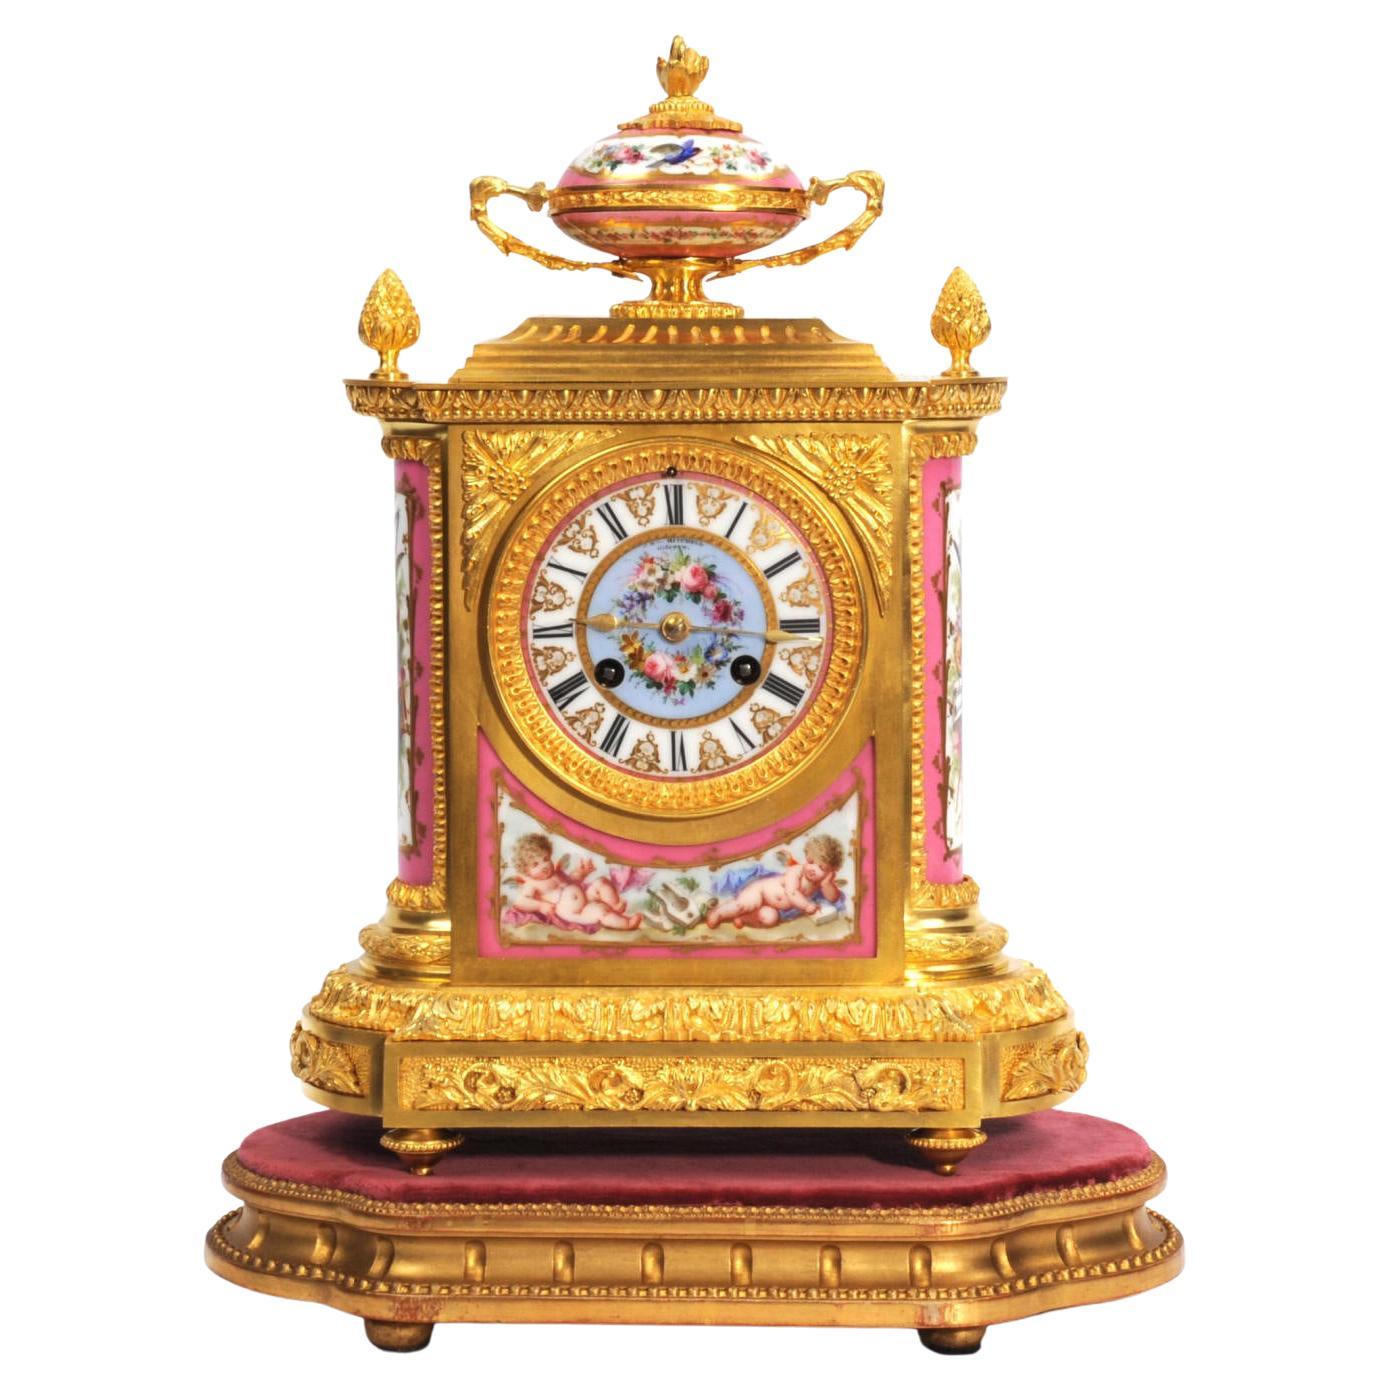 Fine Ormolu and Sevres Porcelain Clock by Jean-Baptiste Delettrez